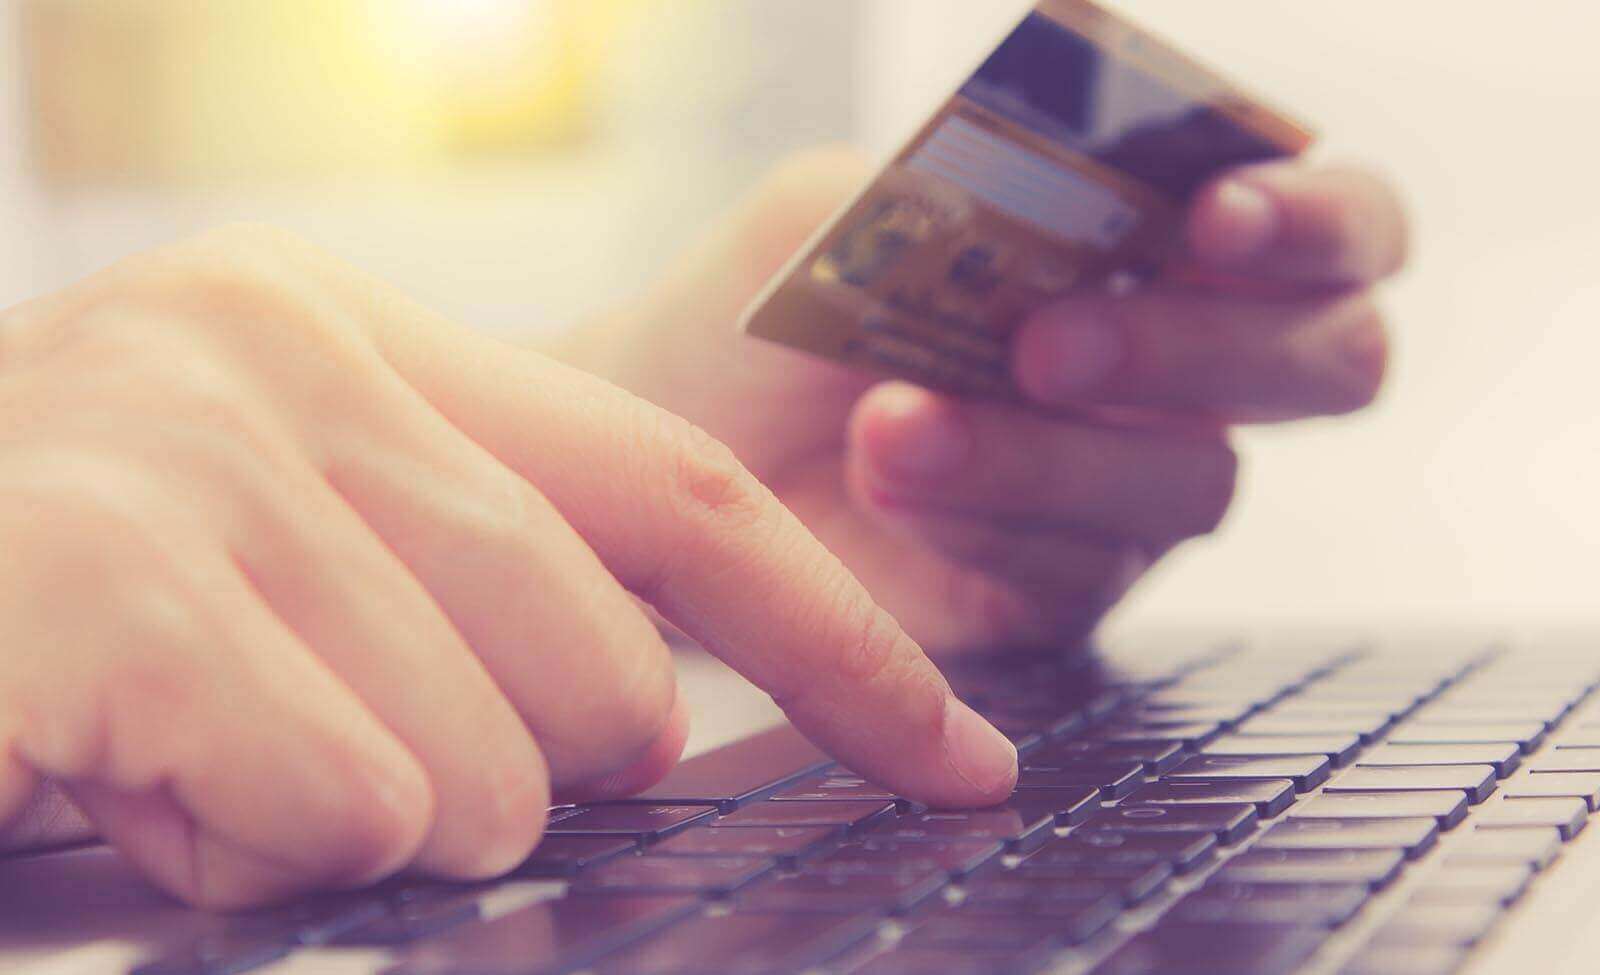 consumer enters debit card zip code on a laptop